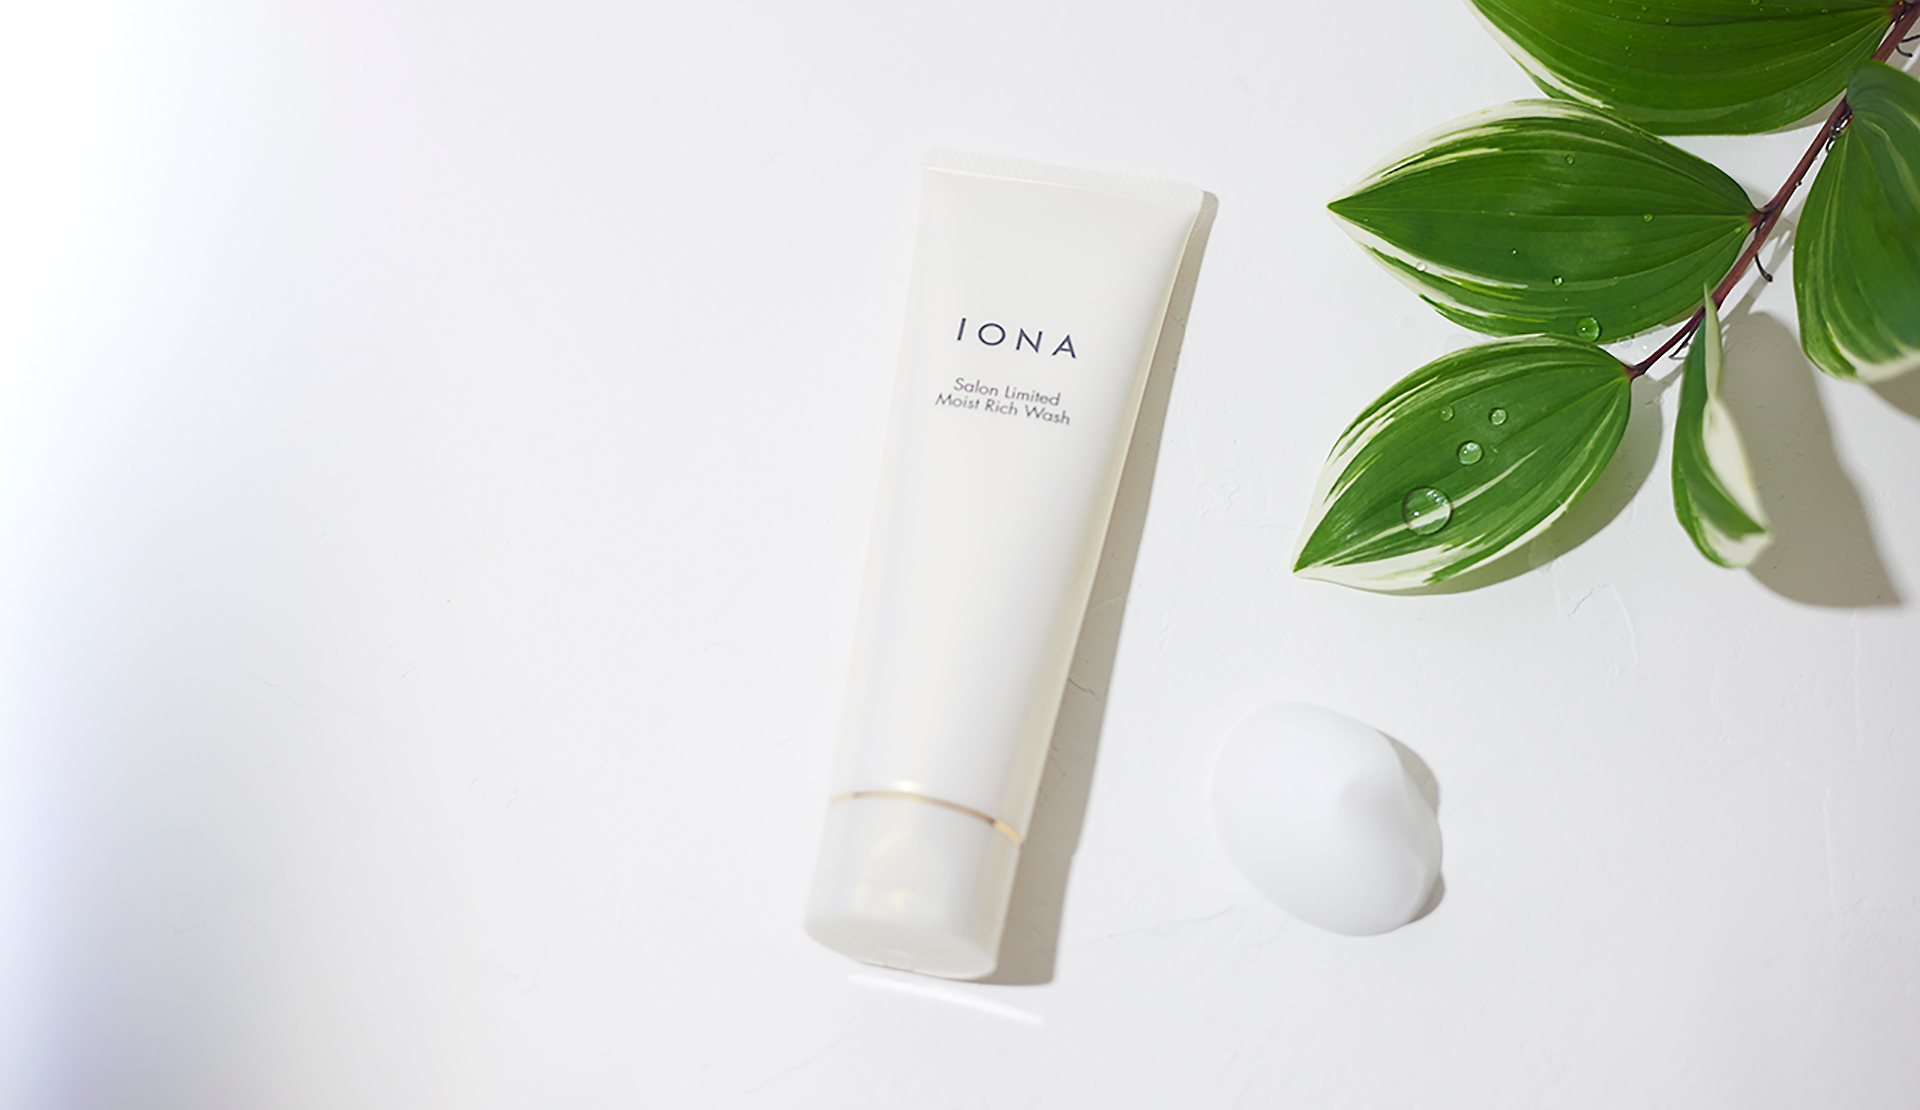 IONA Salon Limited | IONA